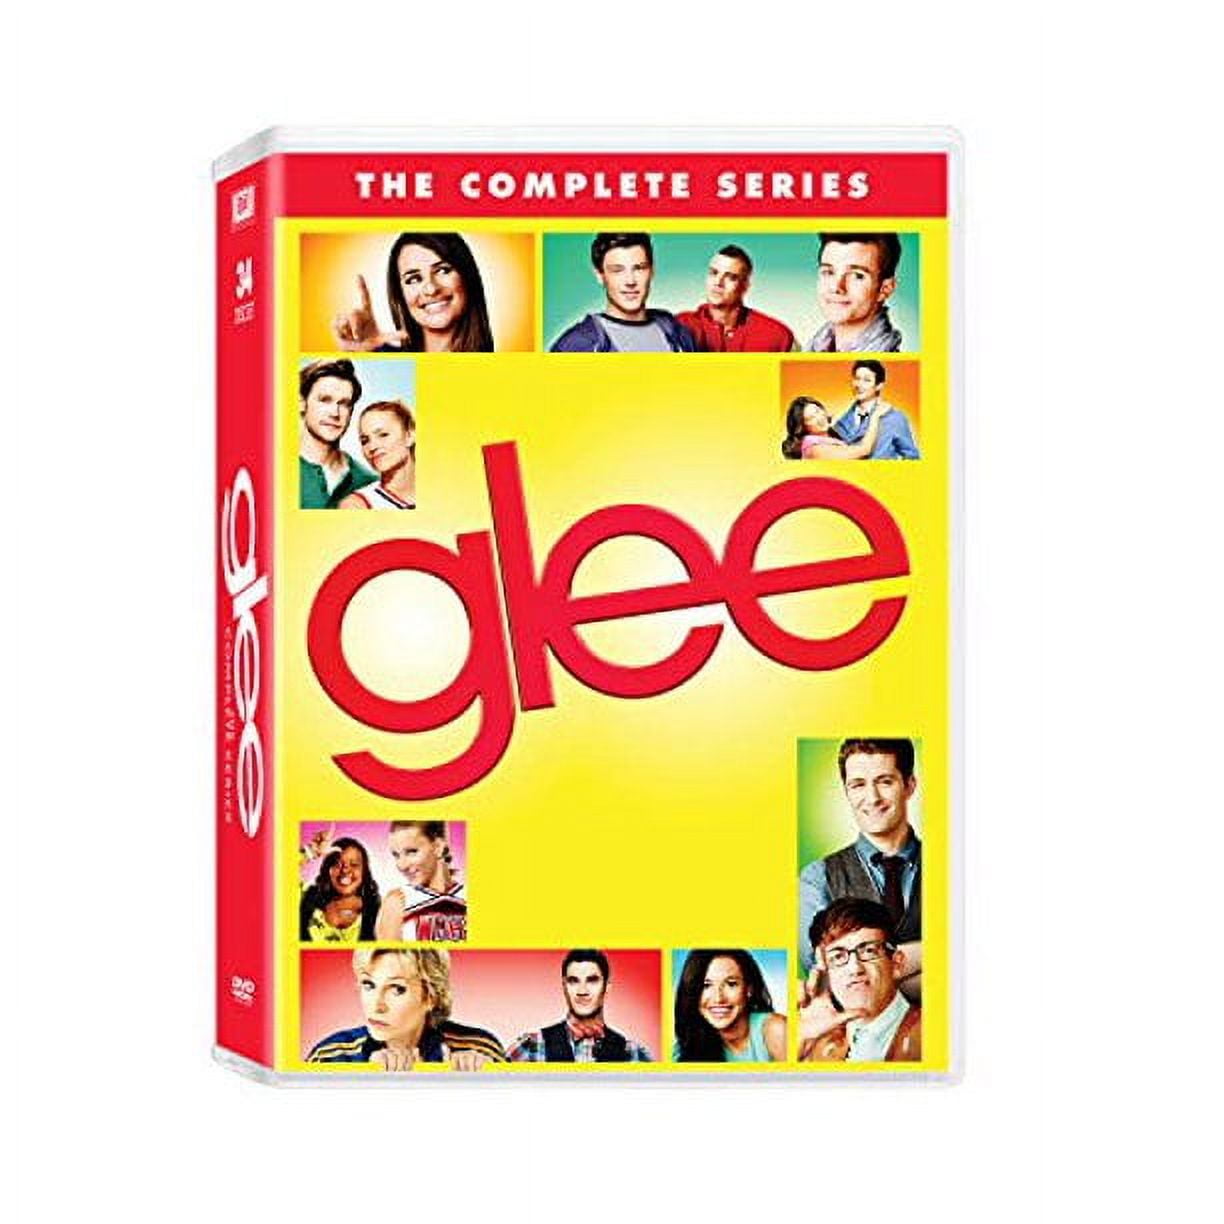 Glee: The Complete Series (DVD), 20th Century Studios, Drama